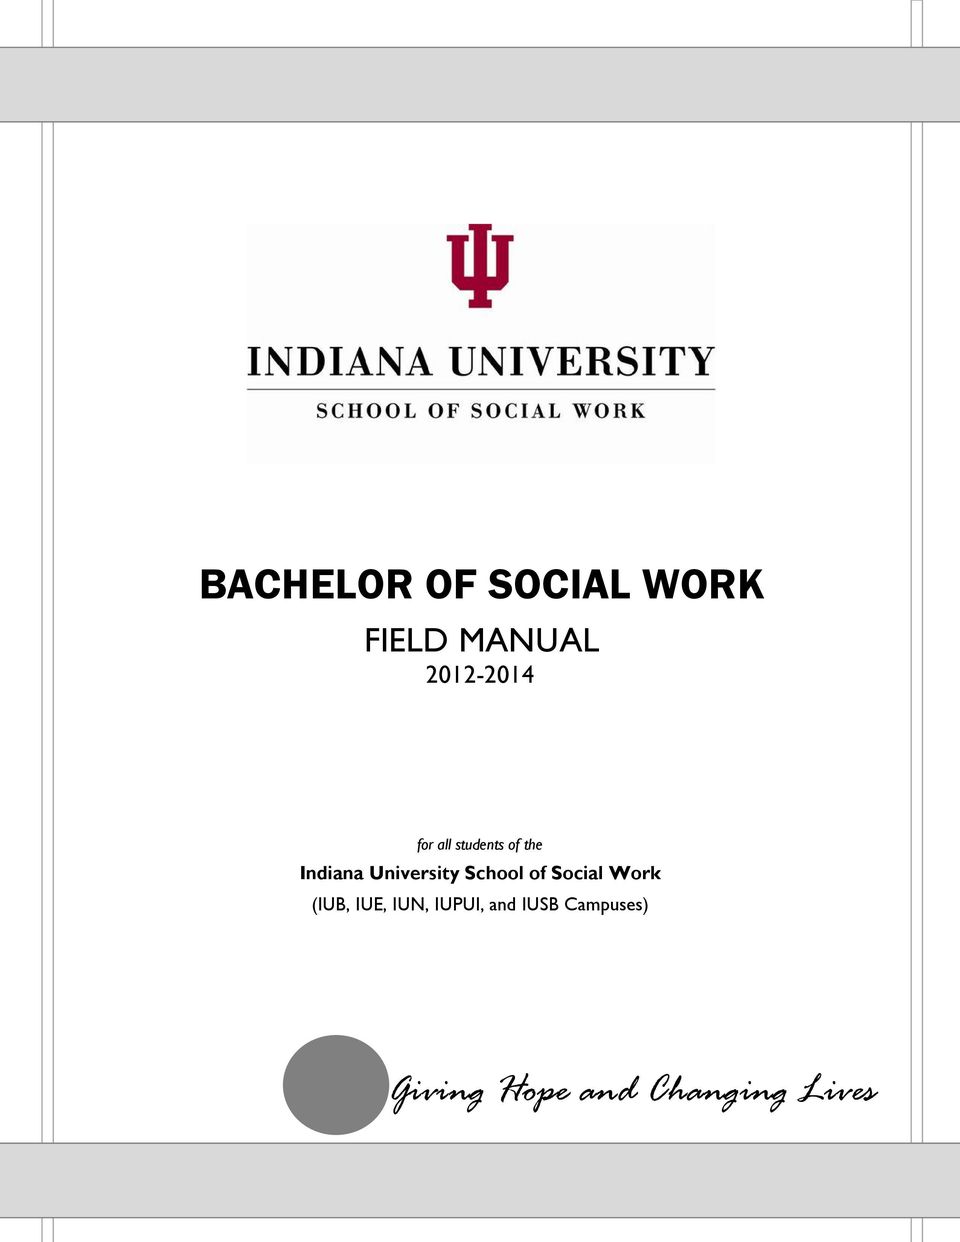 University School of Social Work (IUB, IUE, IUN,